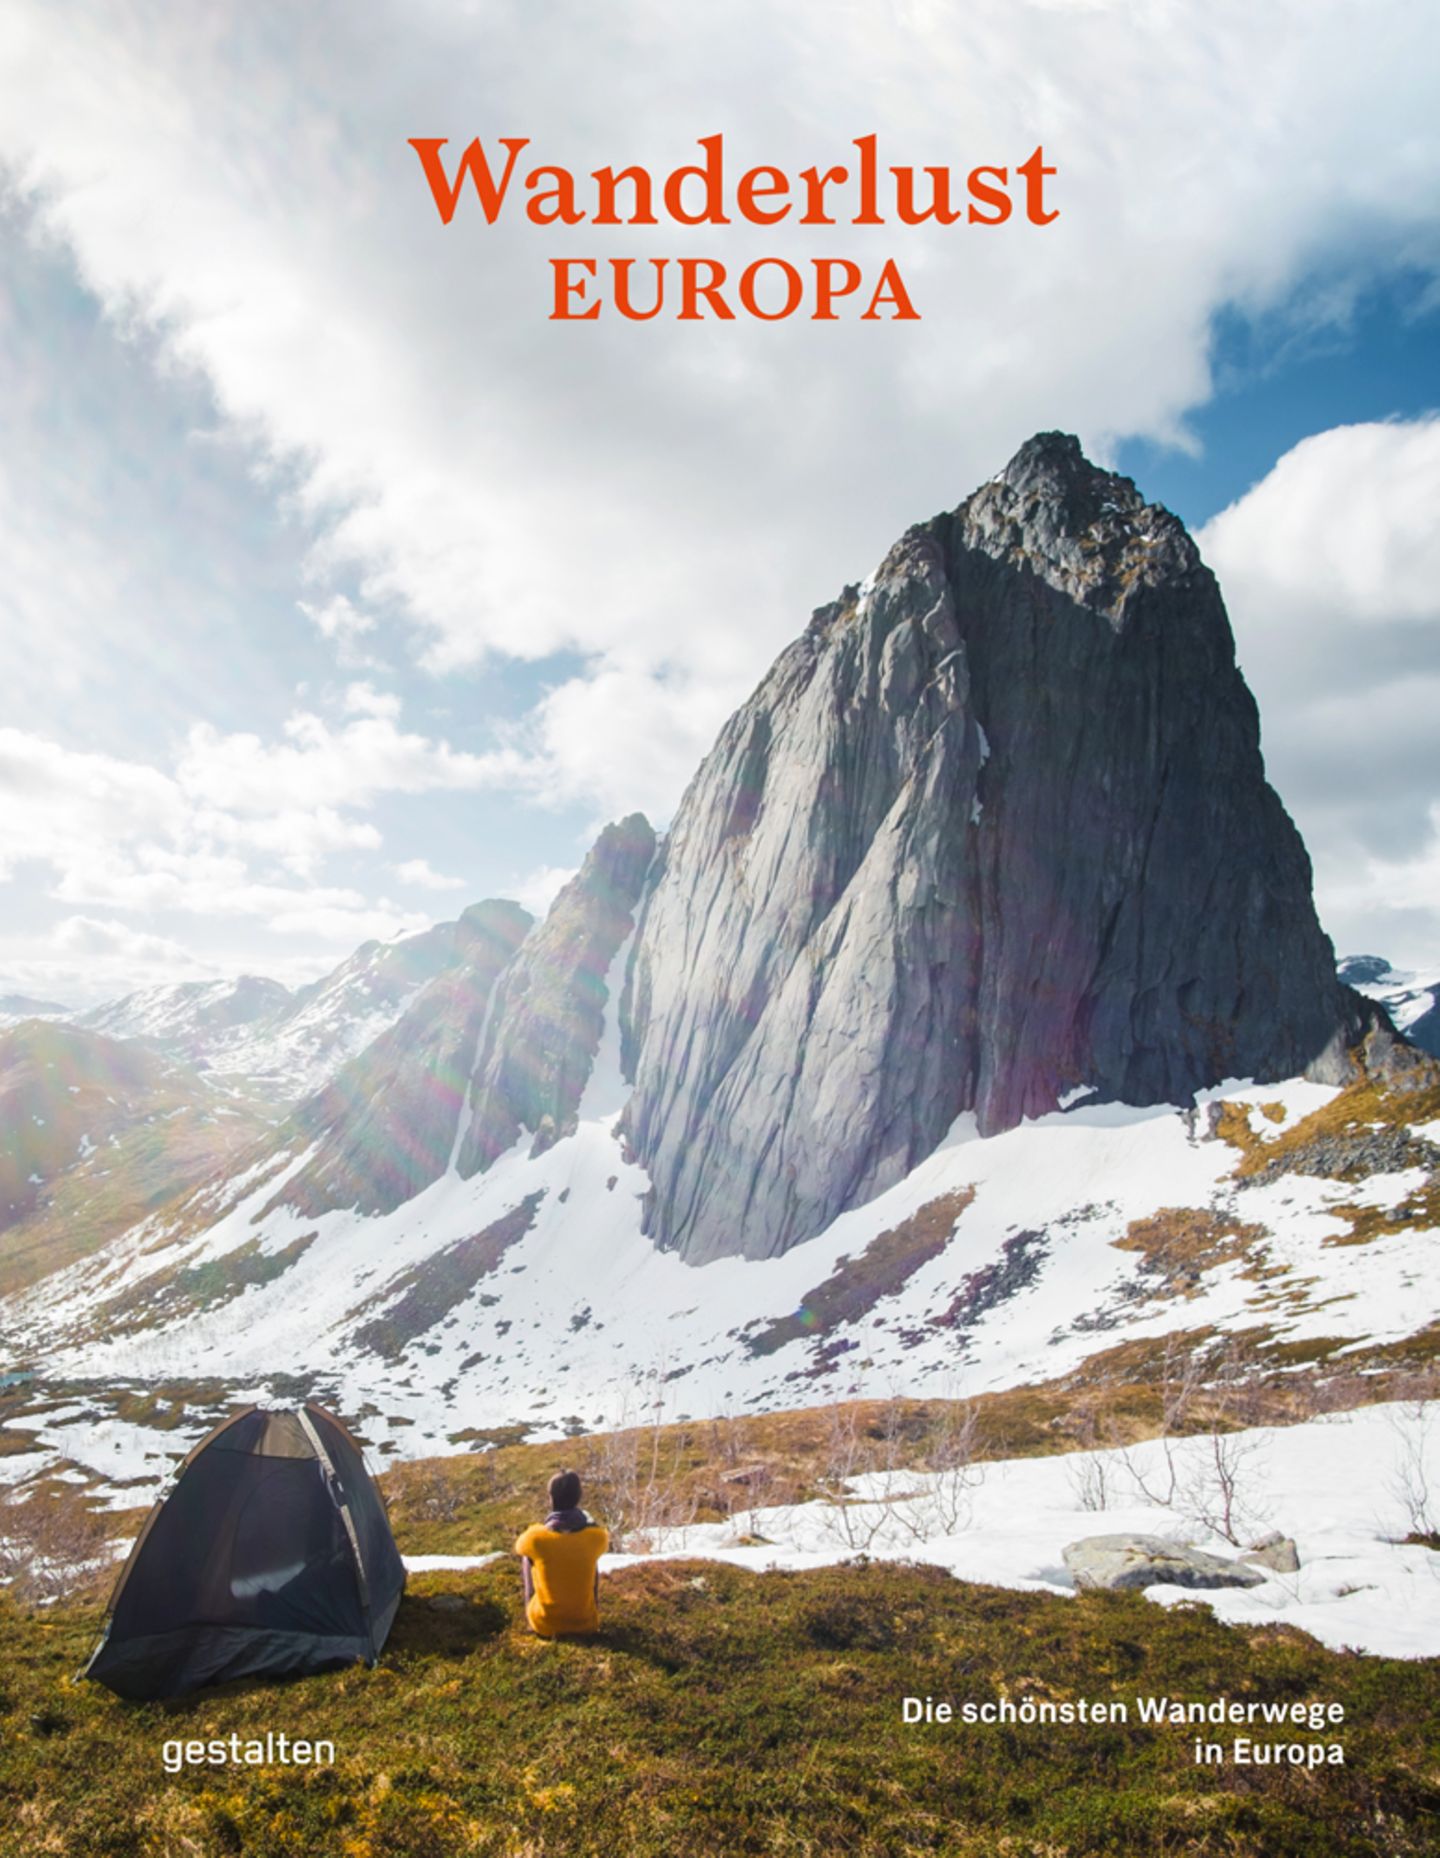 Wanderlust Euopa